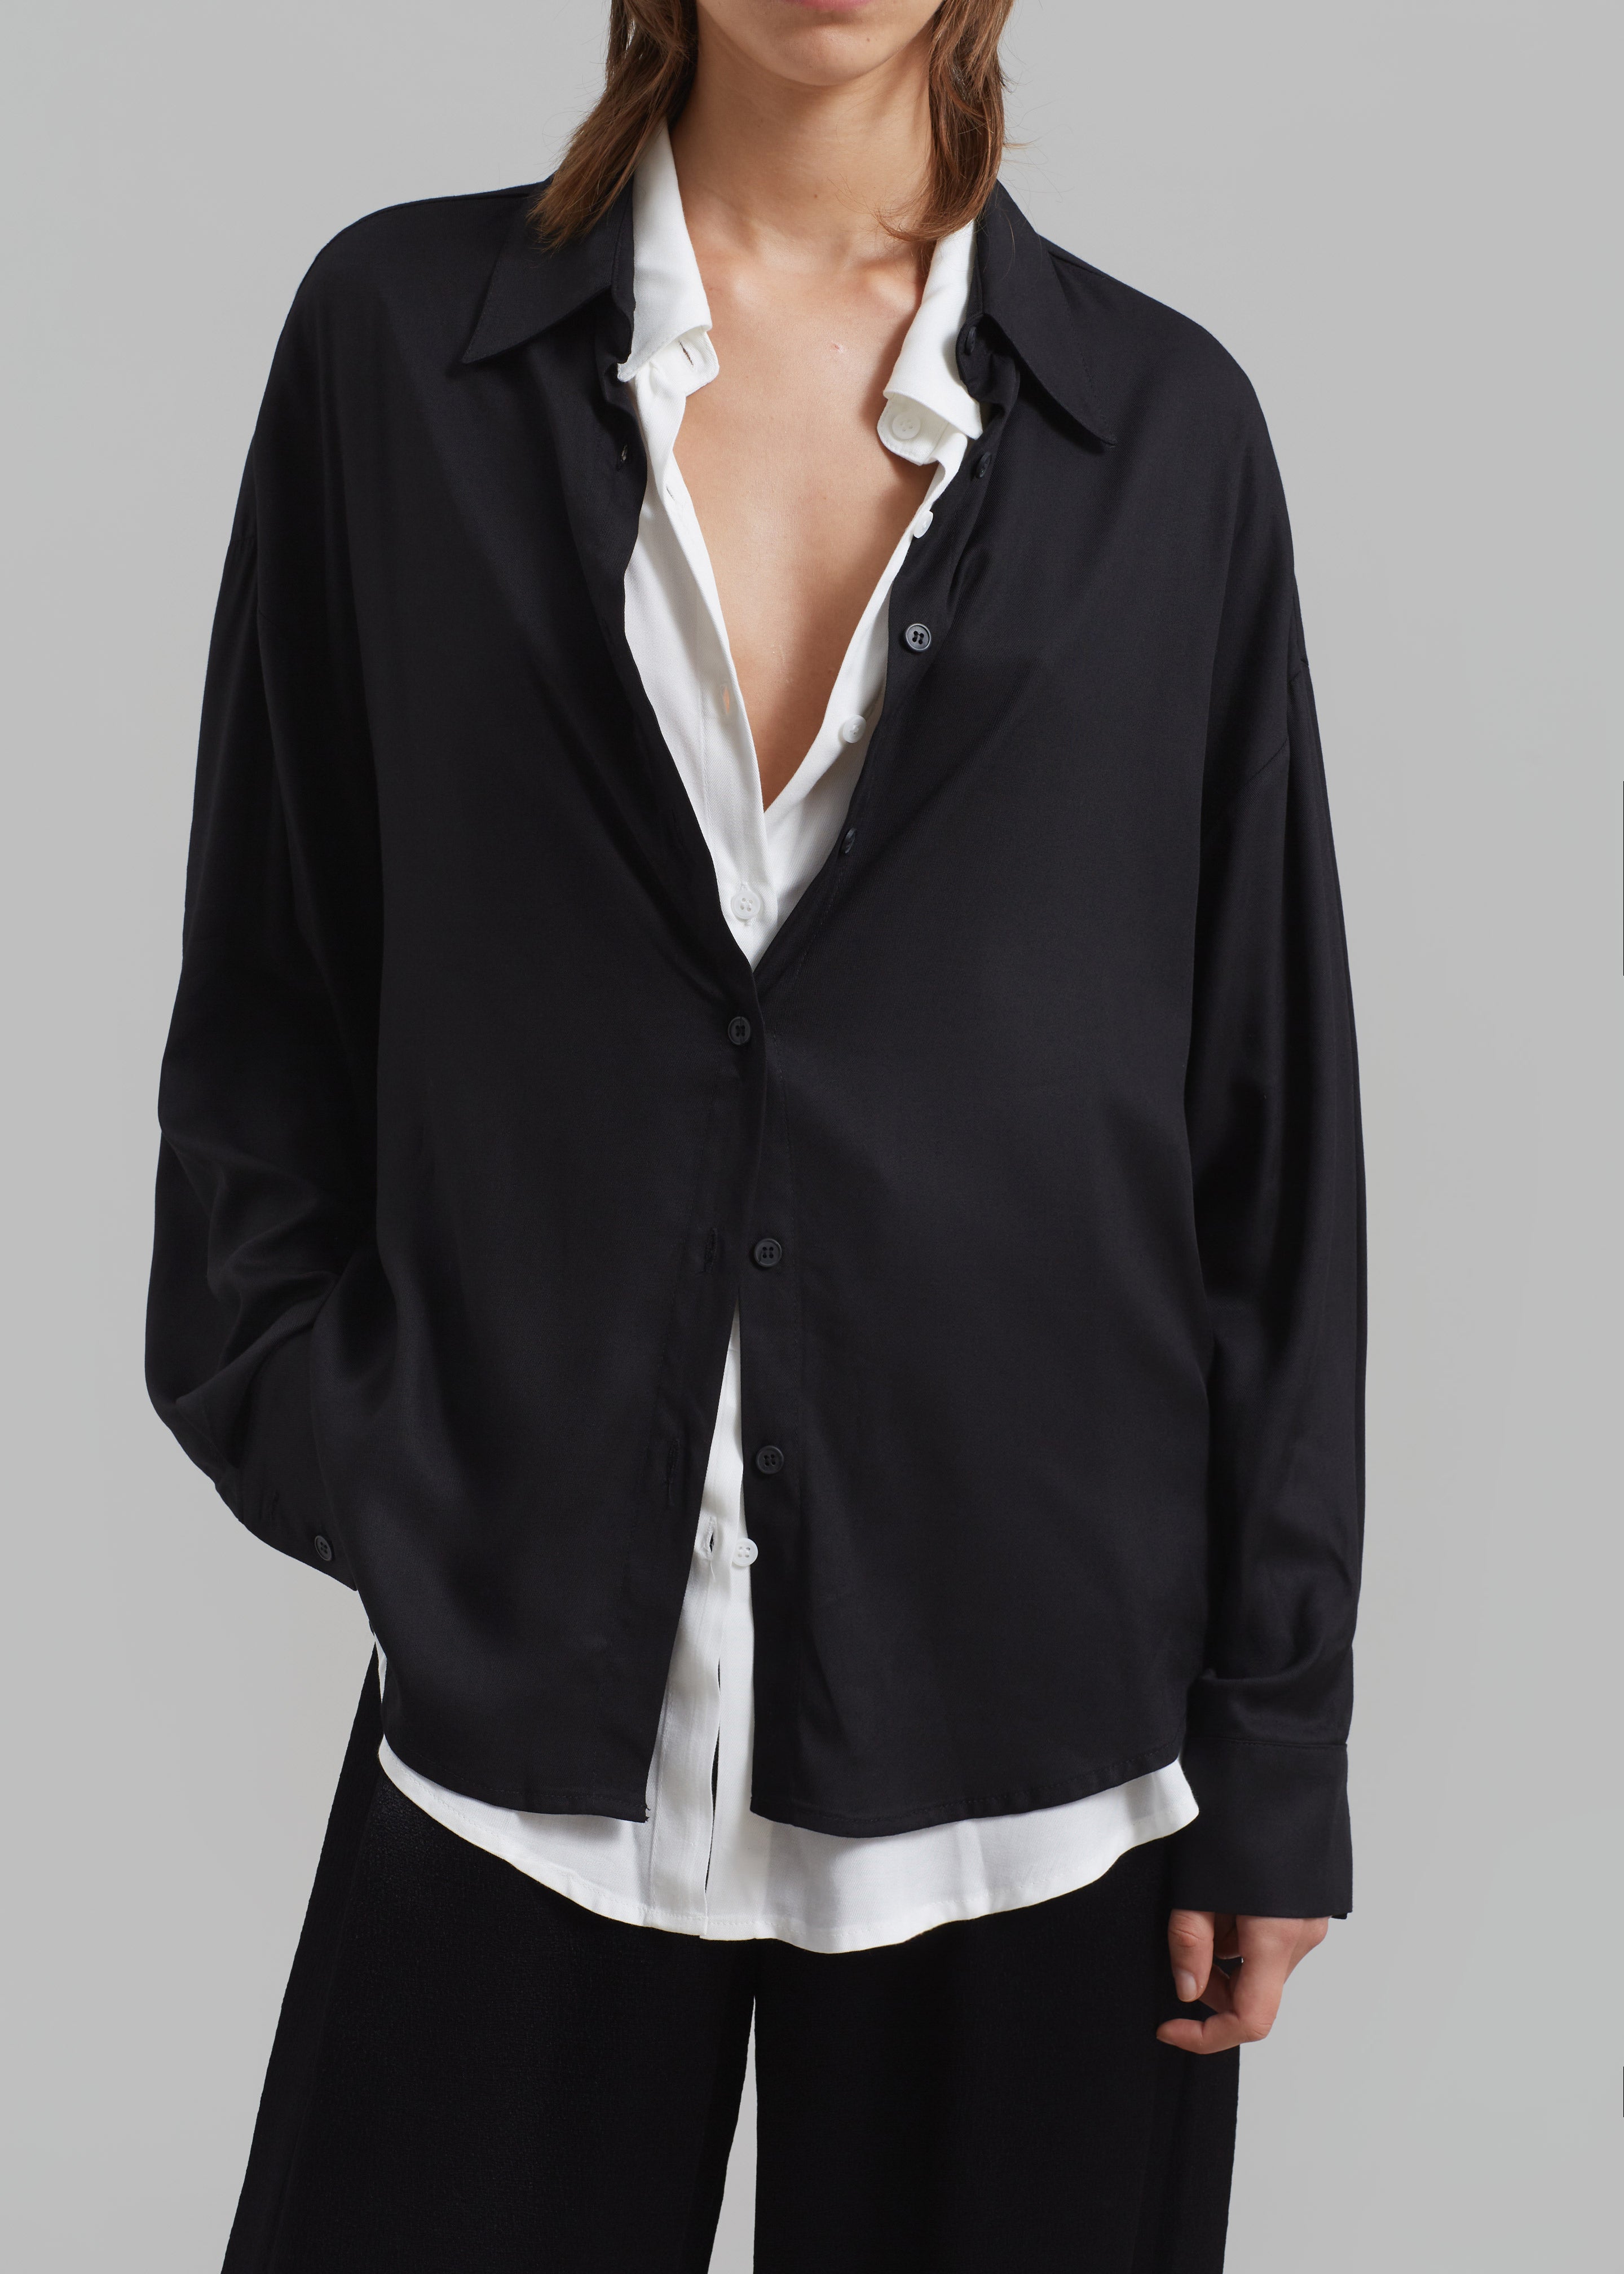 Ann Double Layer Shirt - Black/White - 5